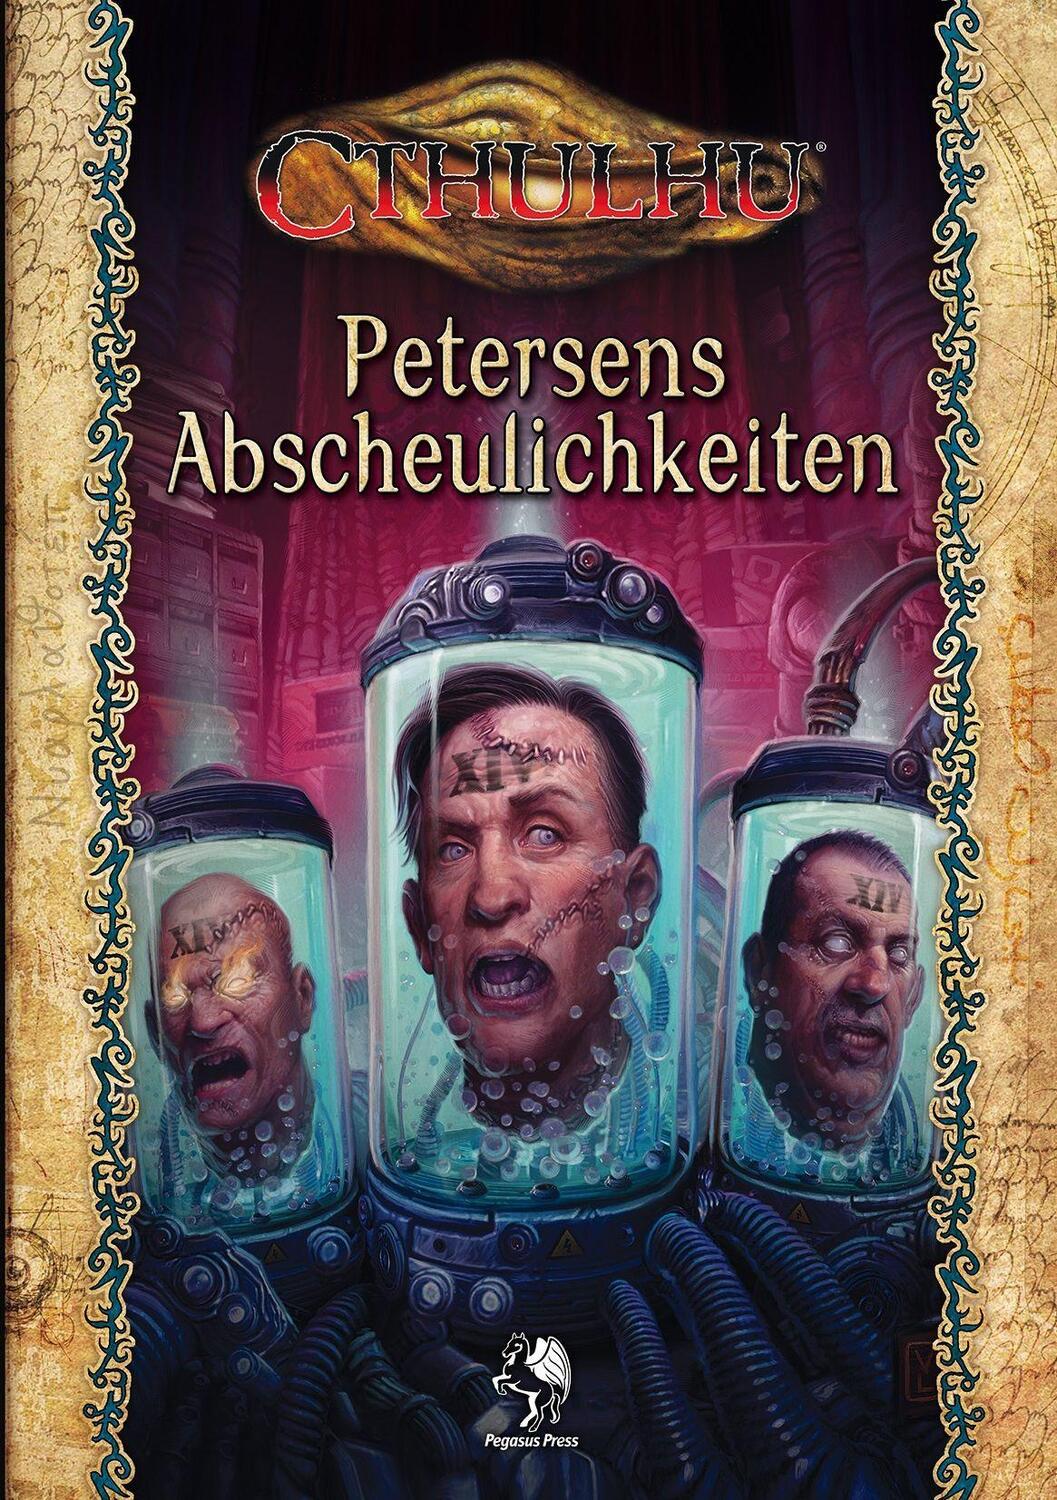 Bild: 9783969280874 | Cthulhu: Petersens Abscheulichkeiten (Normalausgabe) (Hardcover)